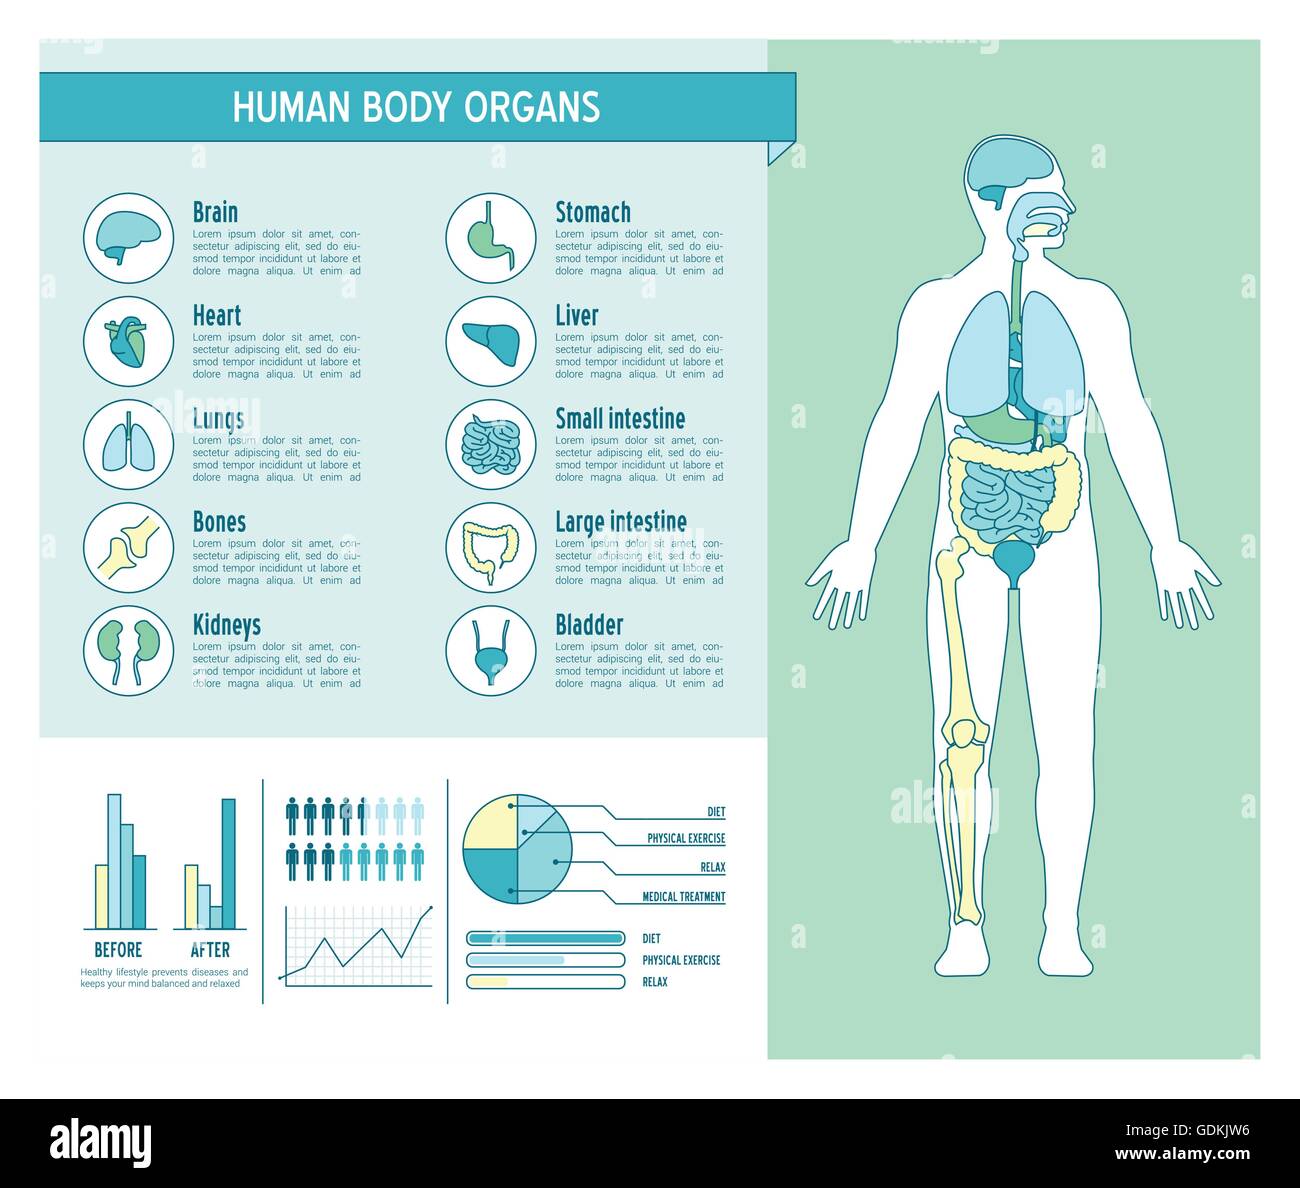 https://c8.alamy.com/comp/GDKJW6/human-body-health-care-infographics-with-medical-icons-organs-charts-GDKJW6.jpg